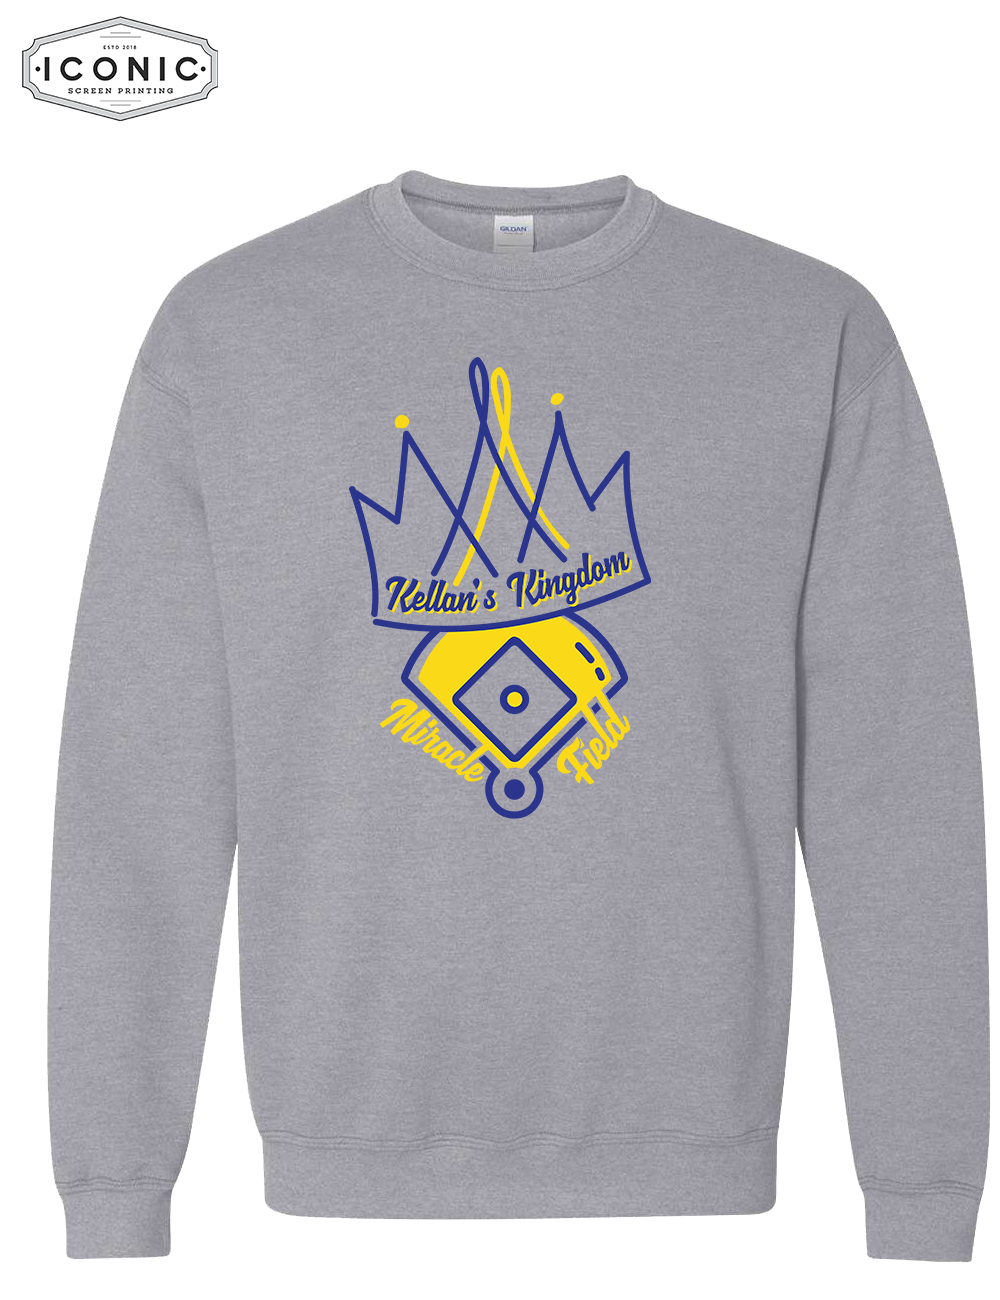 Baseball Crown - Heavy Blend Sweatshirt